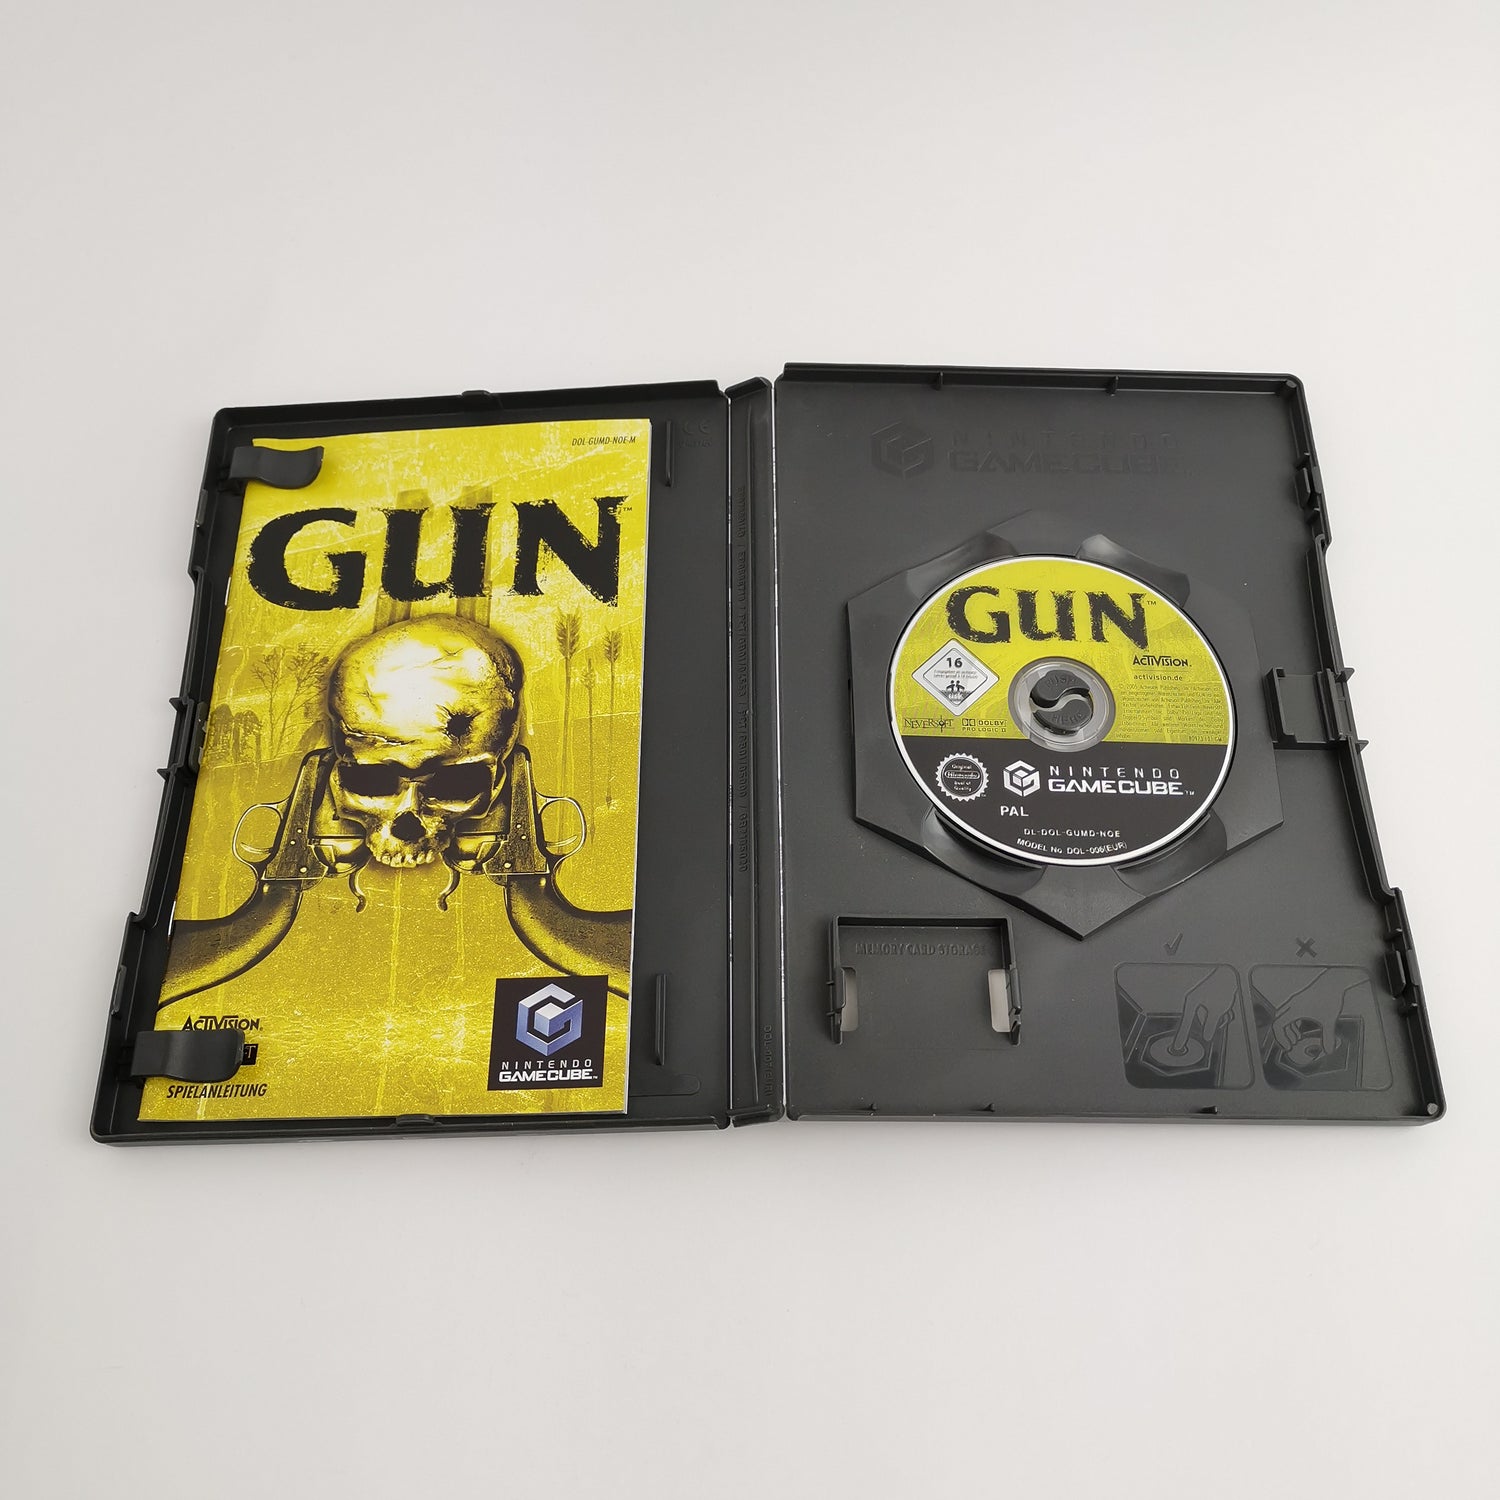 Nintendo Gamecube Game: GUN - Activision | German PAL version - original packaging